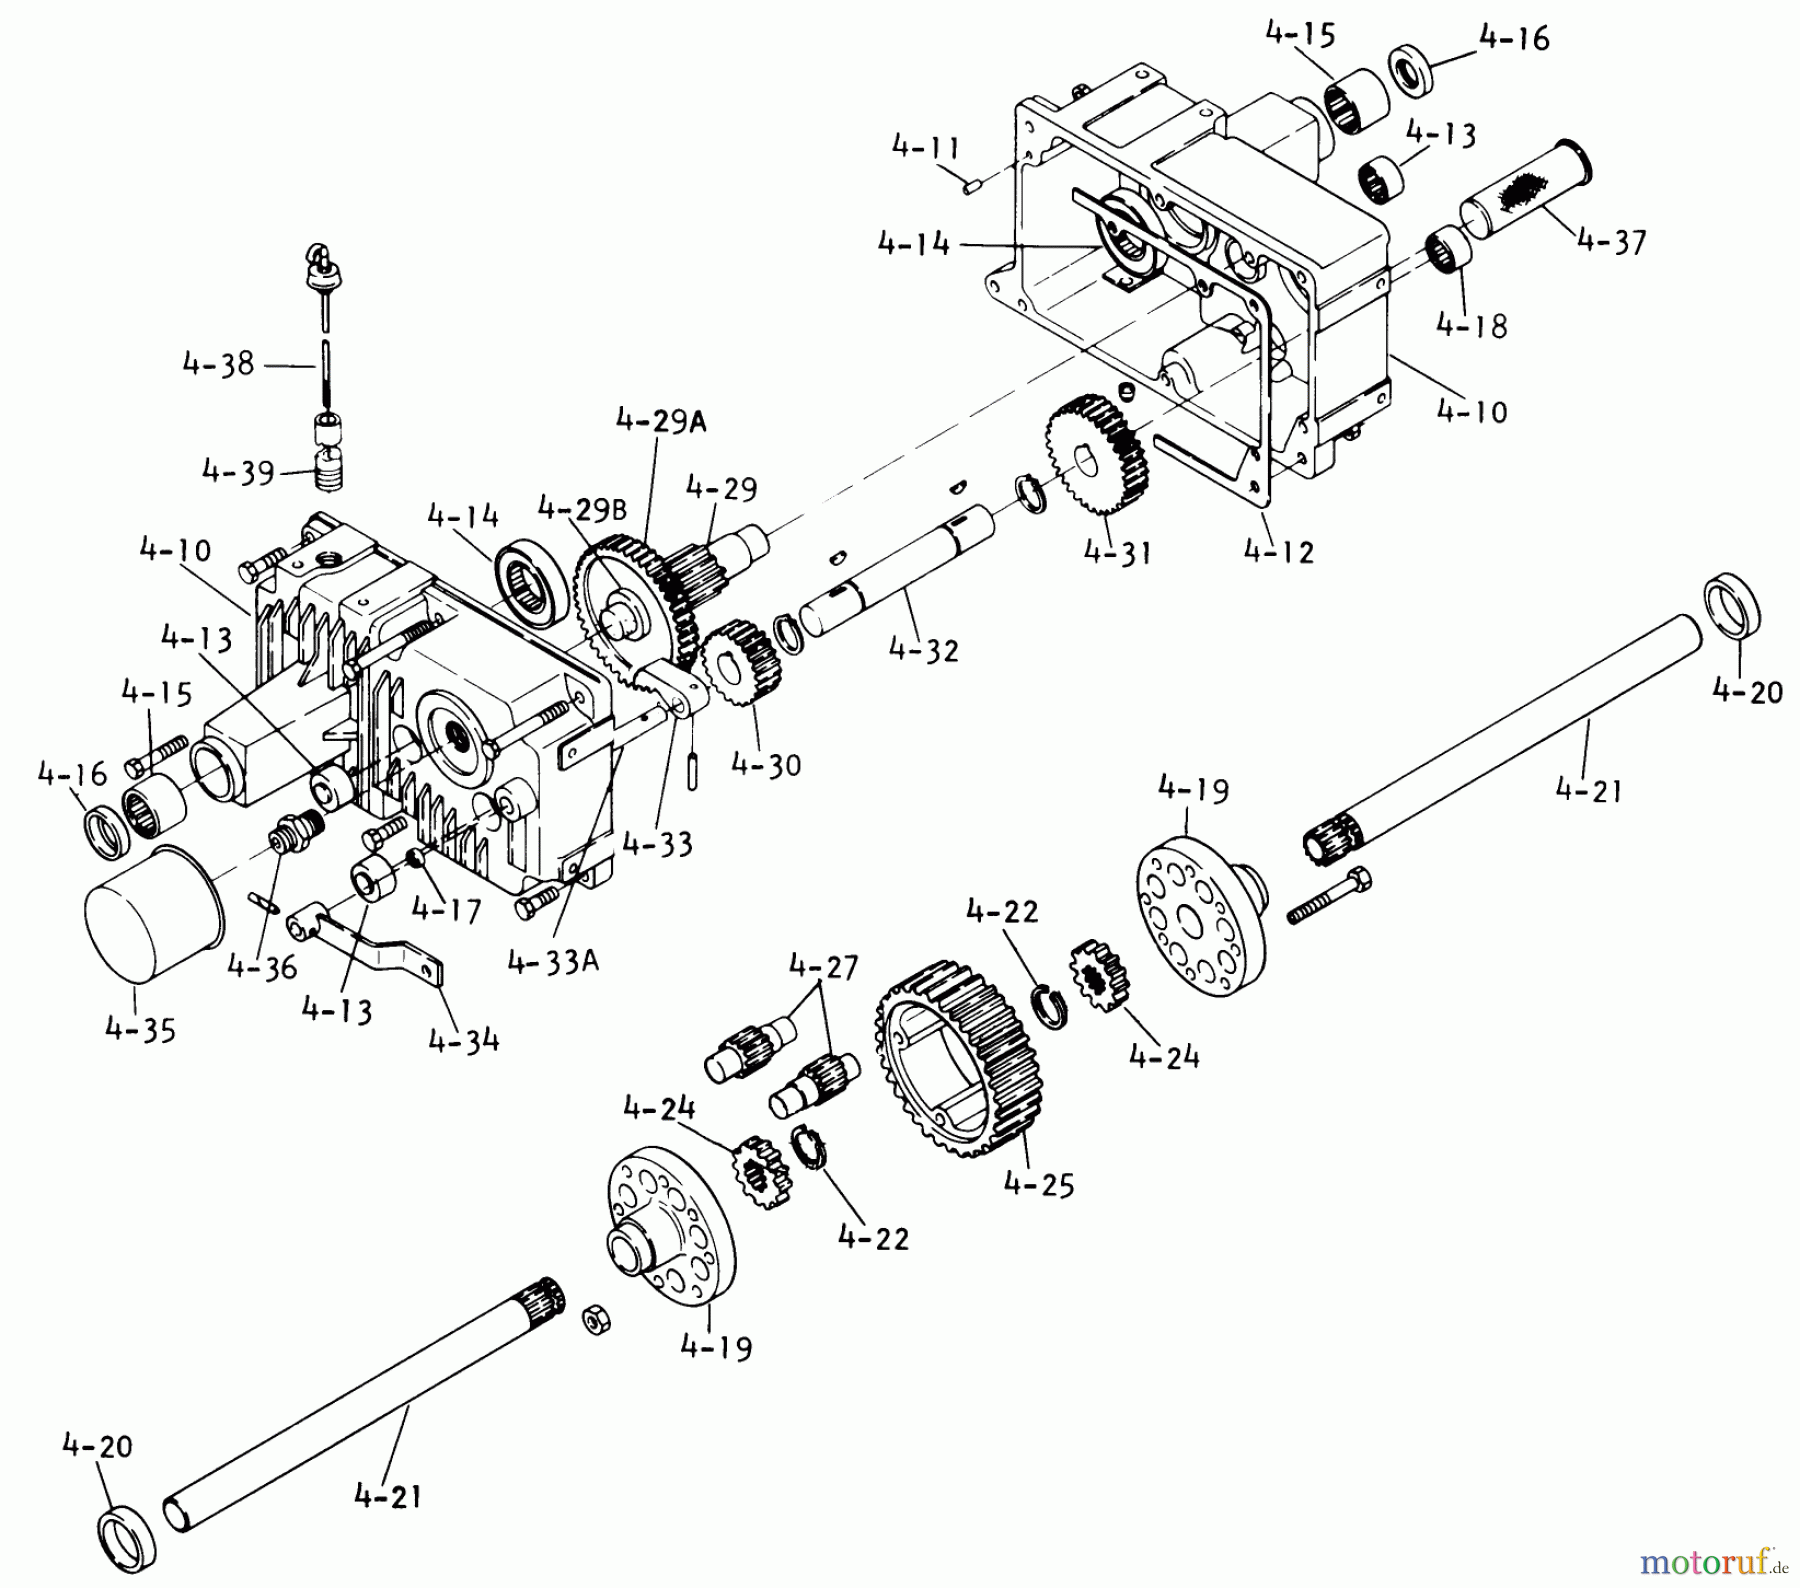  Toro Neu Mowers, Lawn & Garden Tractor Seite 1 1-0630 (D-200) - Toro D-200 Automatic Tractor, 1974 TRANSAXLE - COMPONENT PARTS (PLATE 4.010)